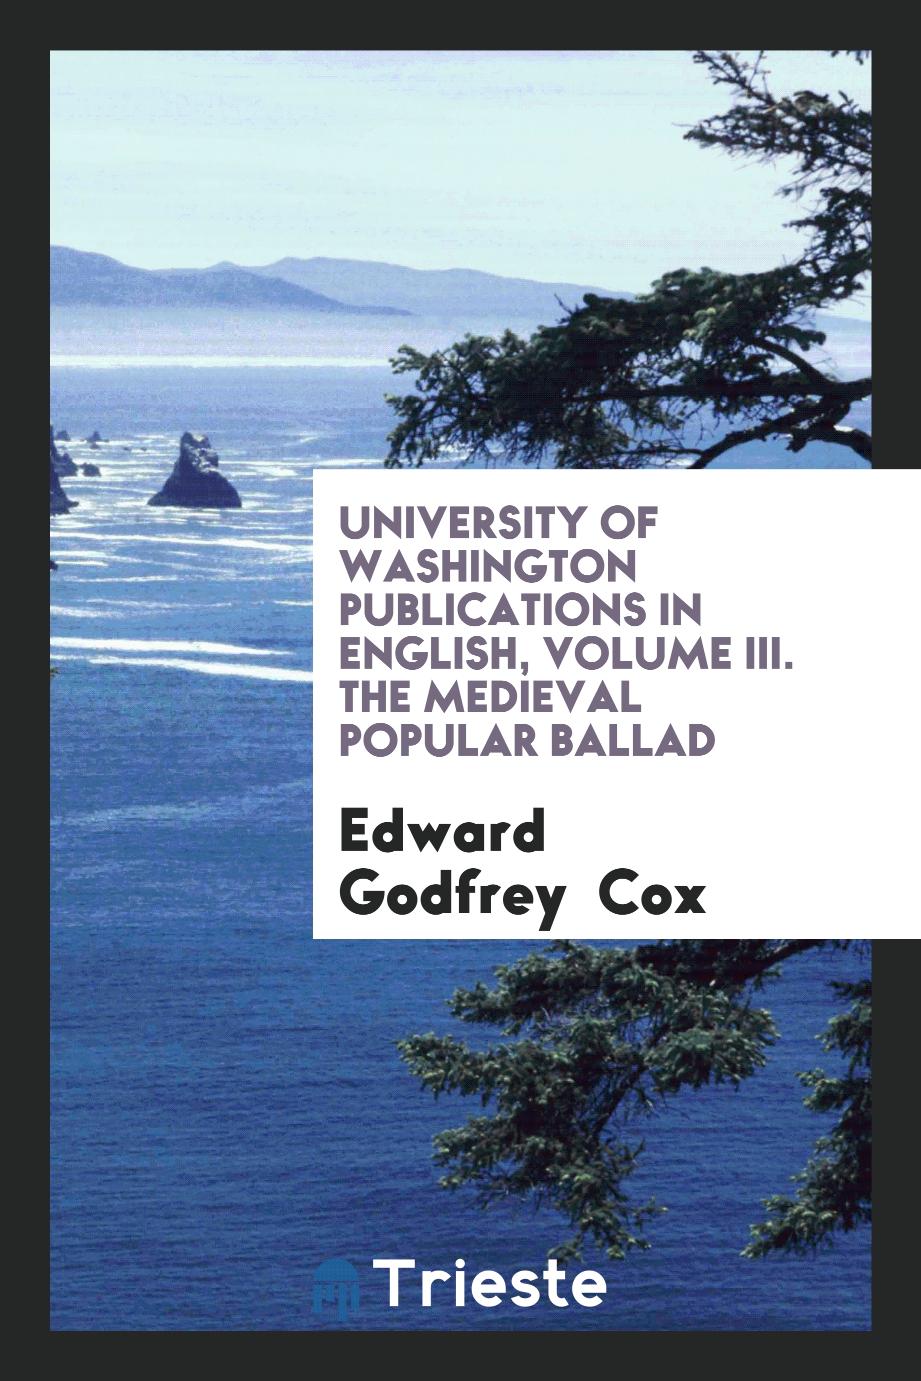 University of Washington Publications in English, Volume III. The Medieval Popular Ballad